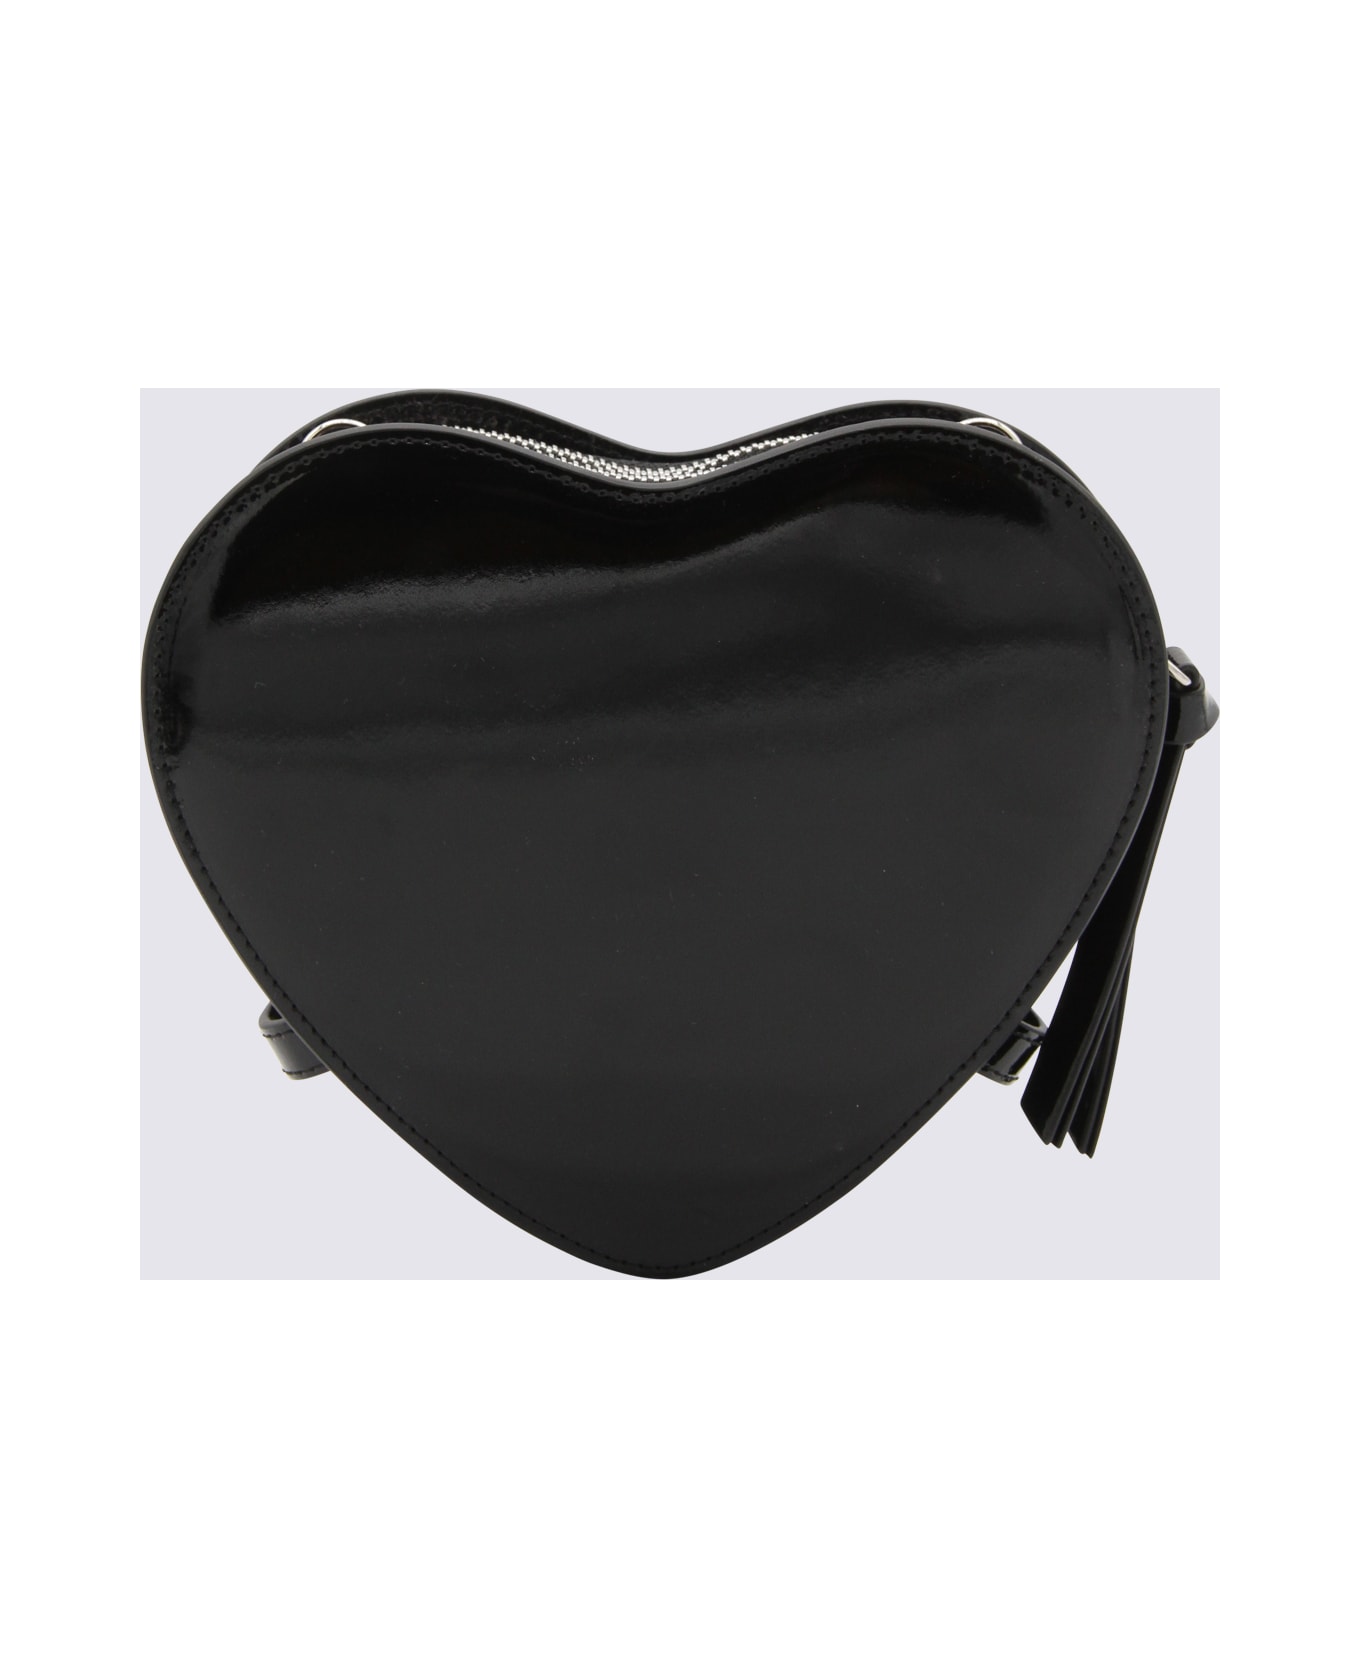 Vivienne Westwood Black Leather Bag - Black